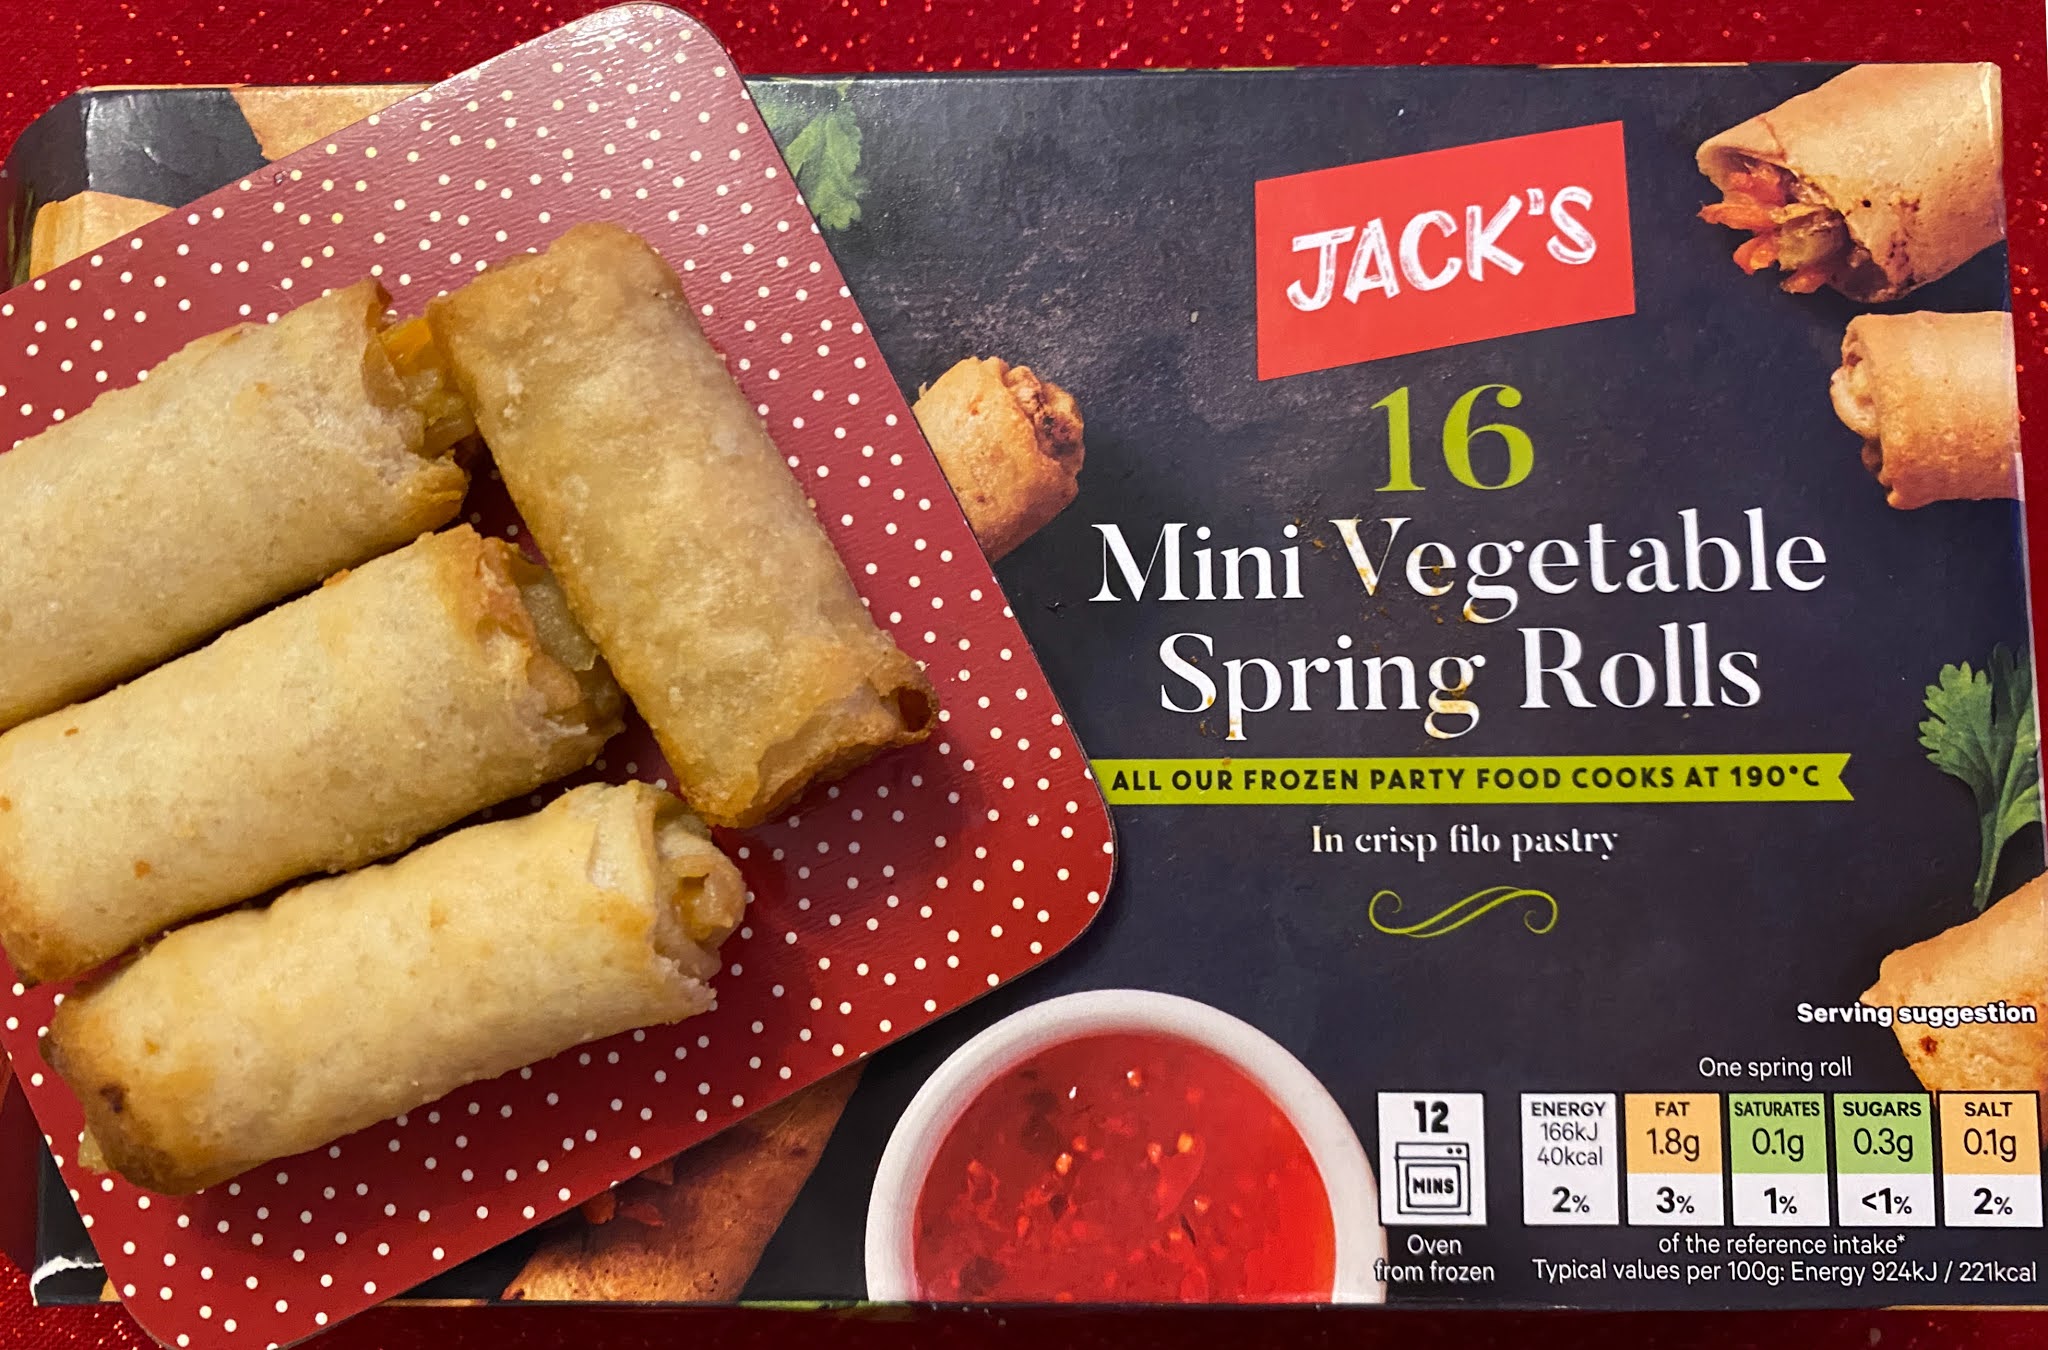 Jack's Mini vegetable spring rolls